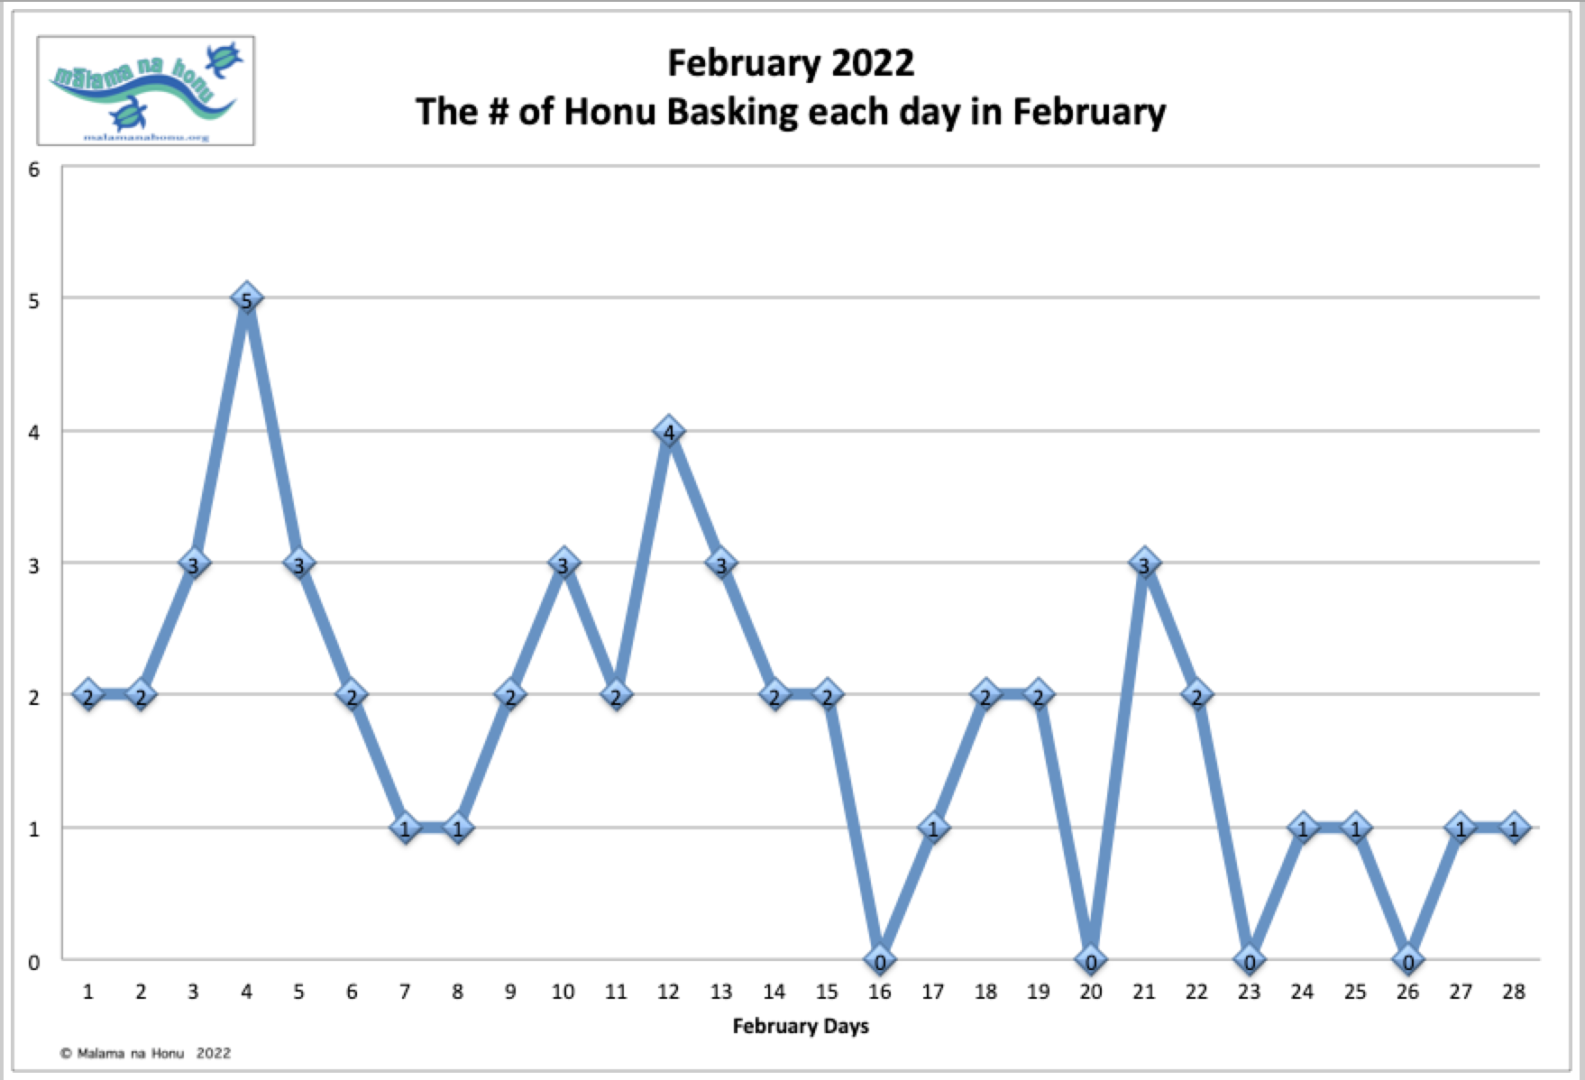 February 2022 The number of Honu Basking each day in February